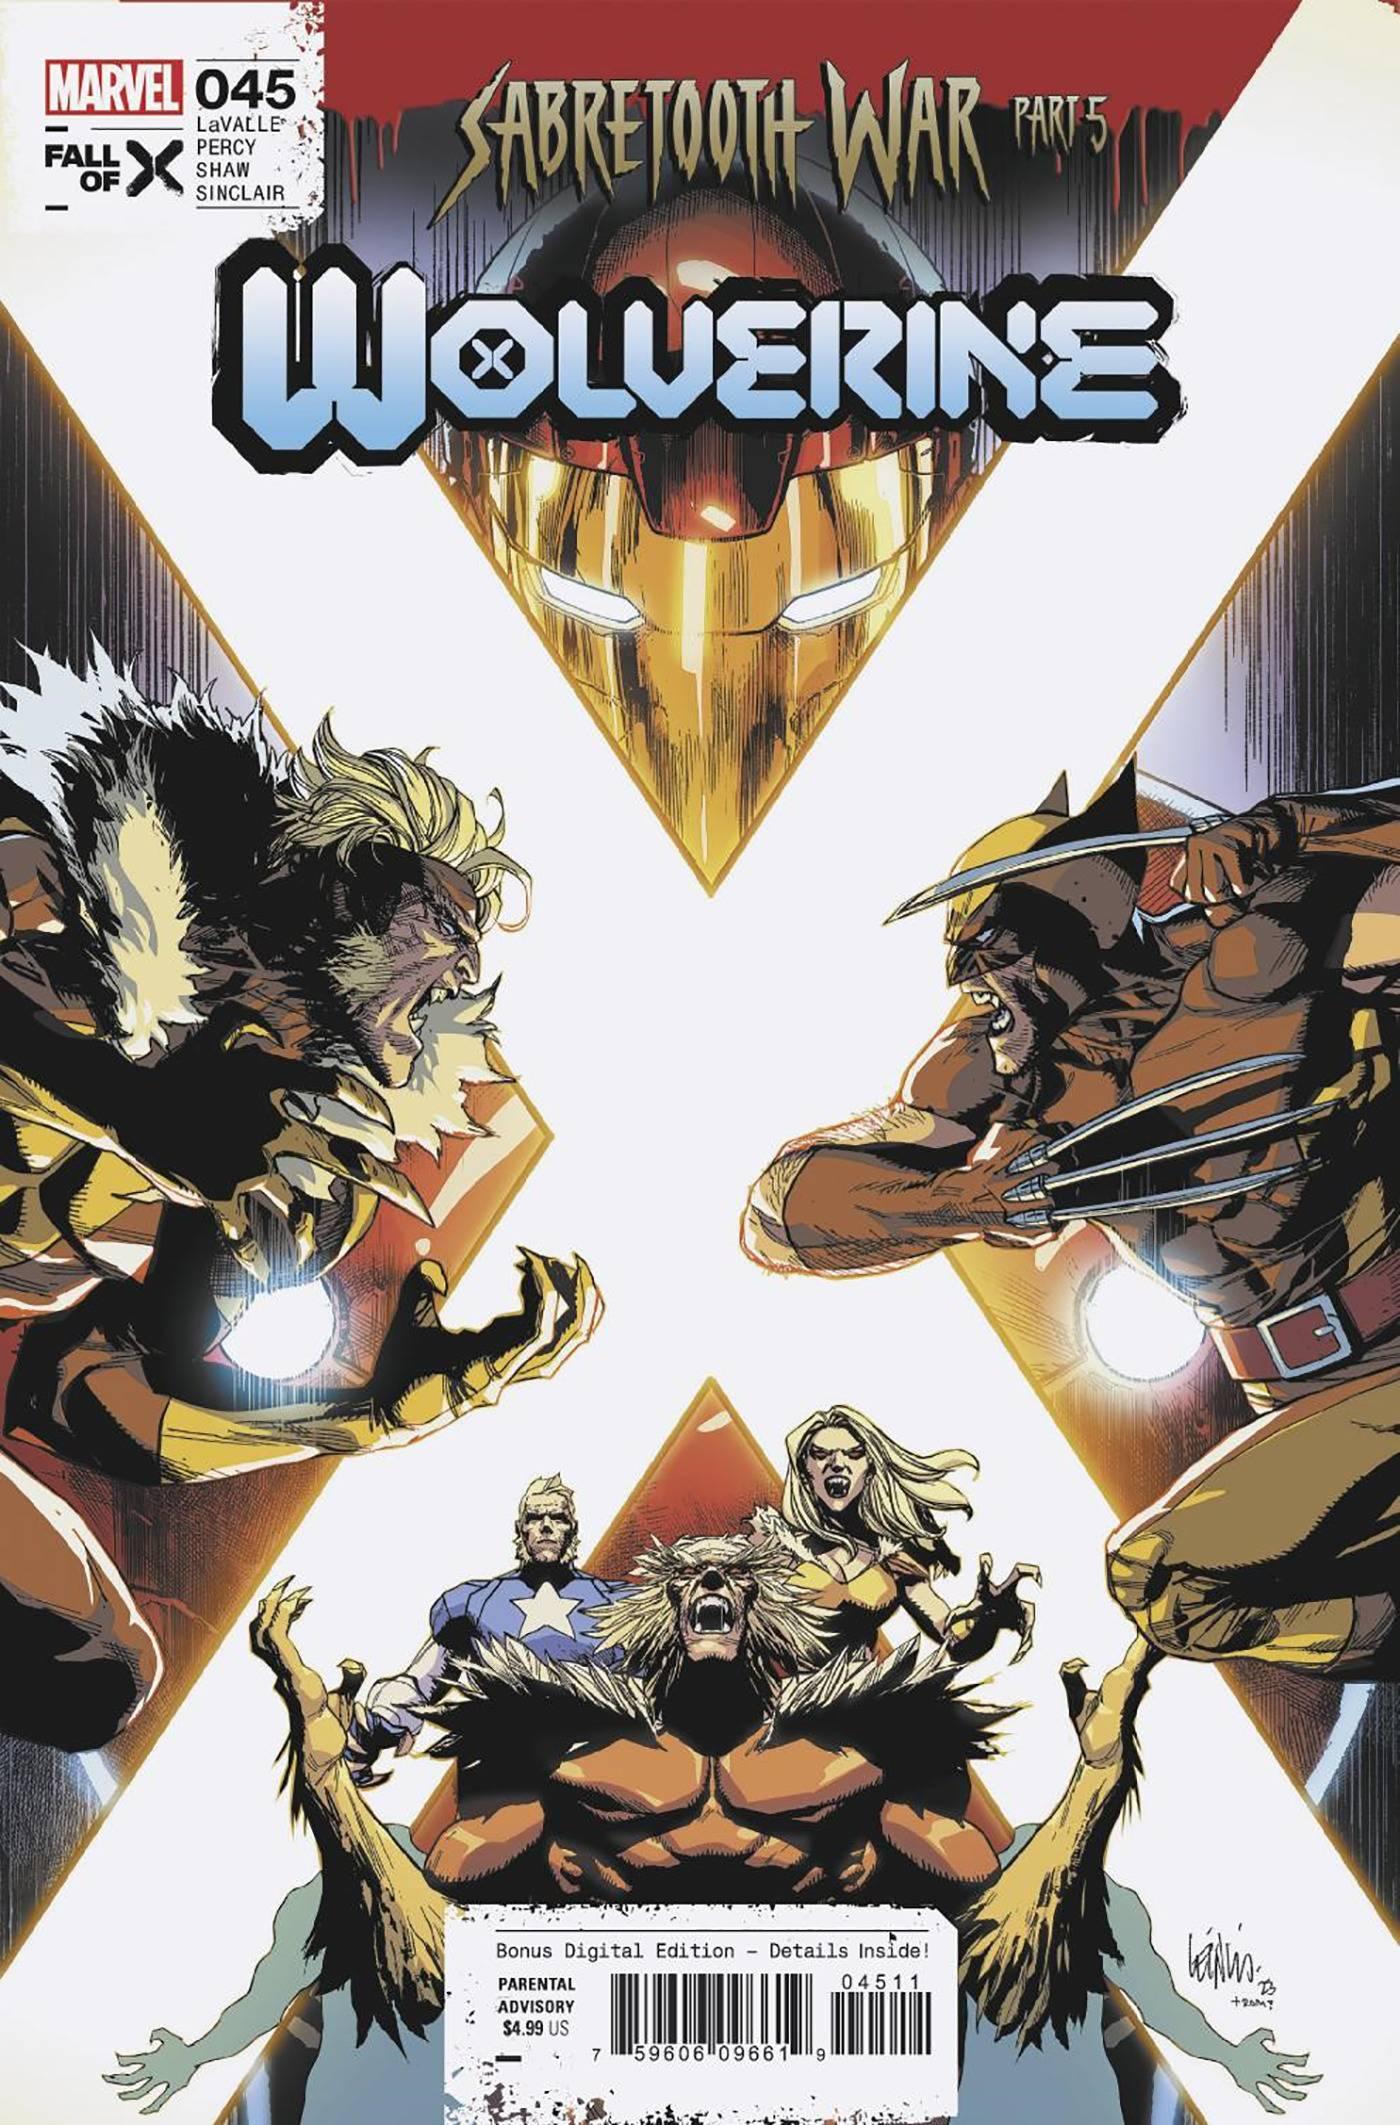 WOLVERINE VOL 6 (2020) #45 - Kings Comics